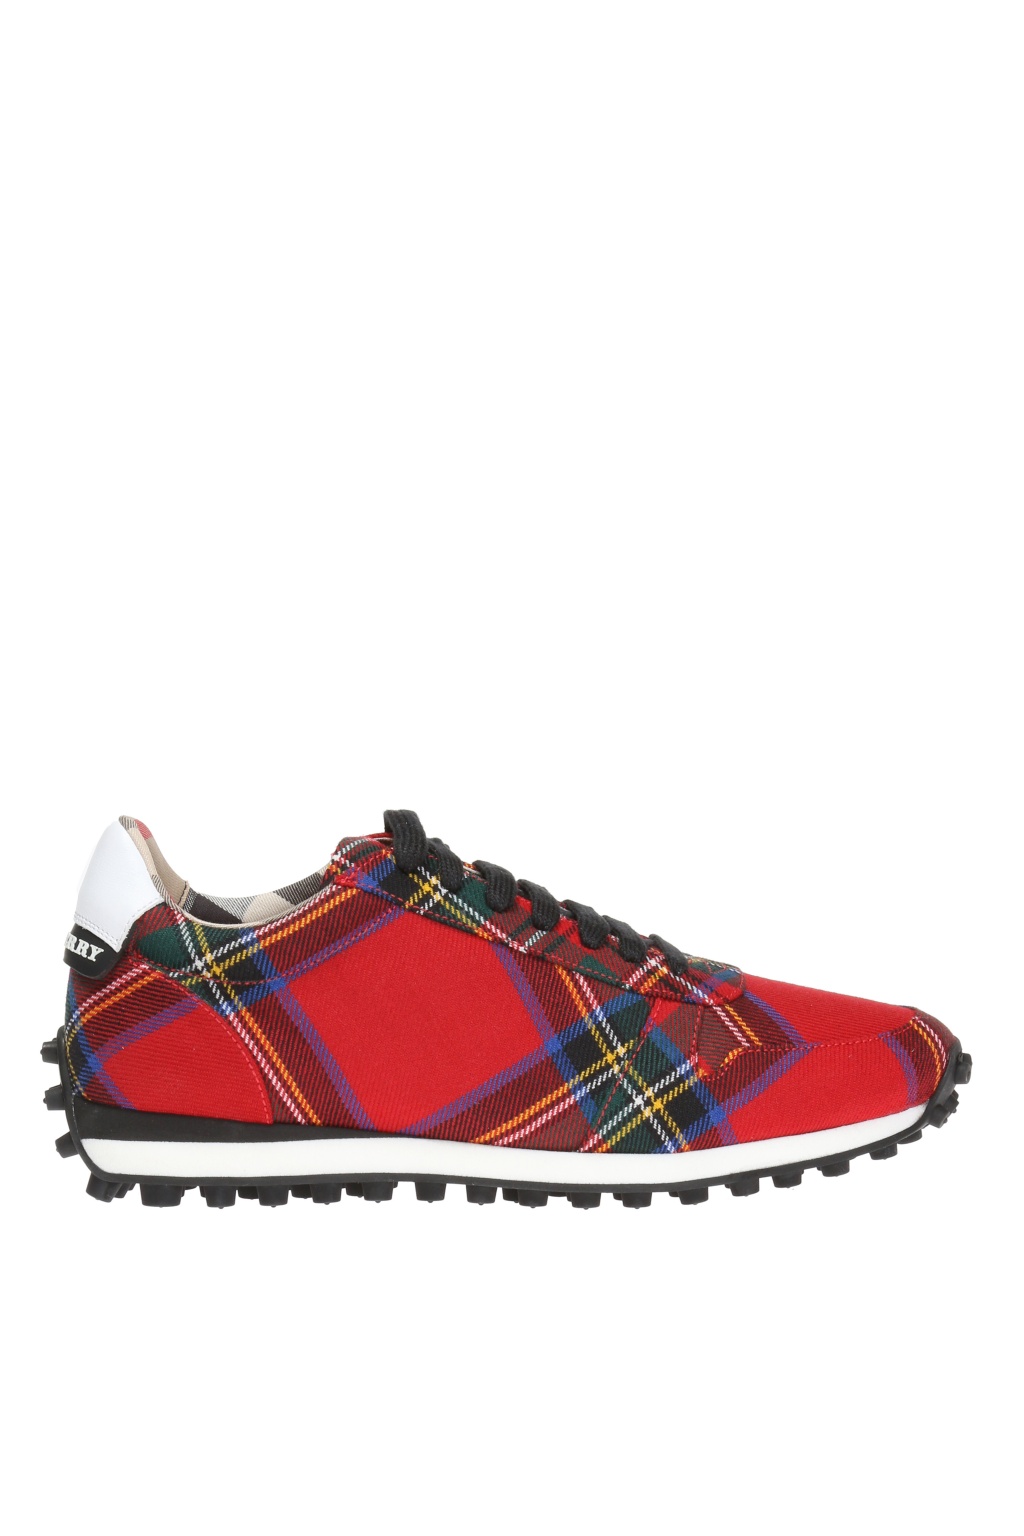 burberry tartan shoes